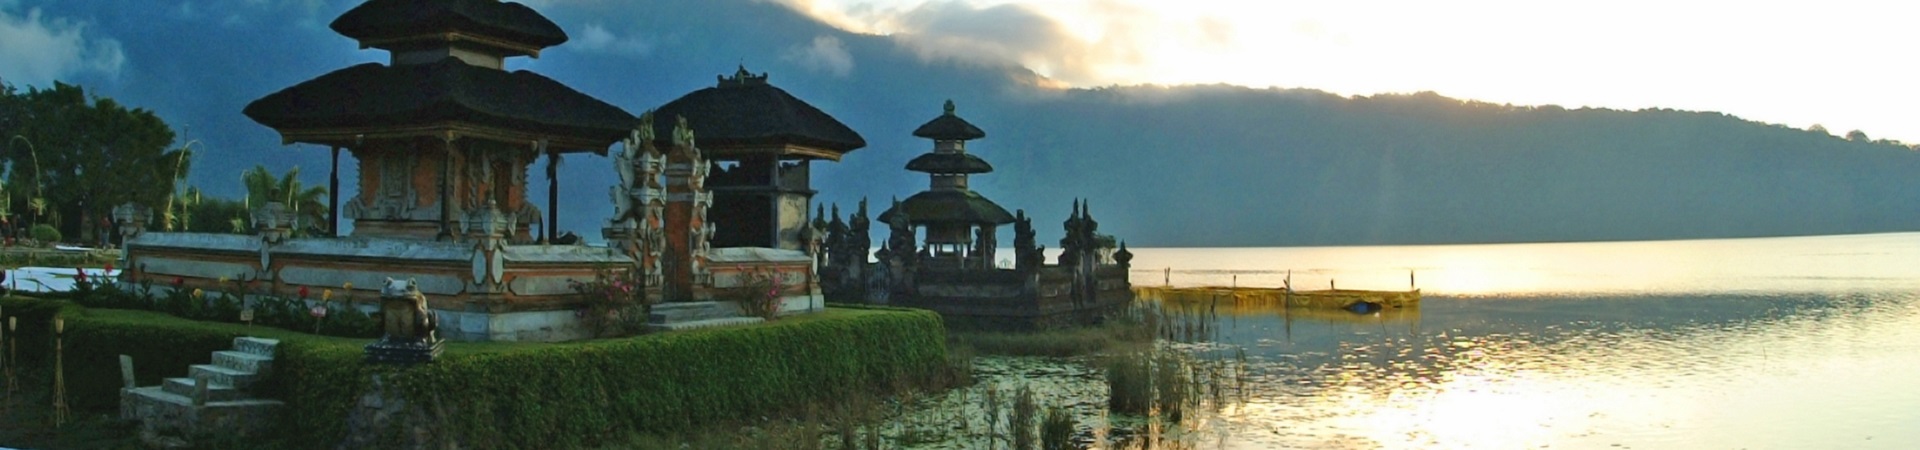 Image of Bali Lakes and Hills